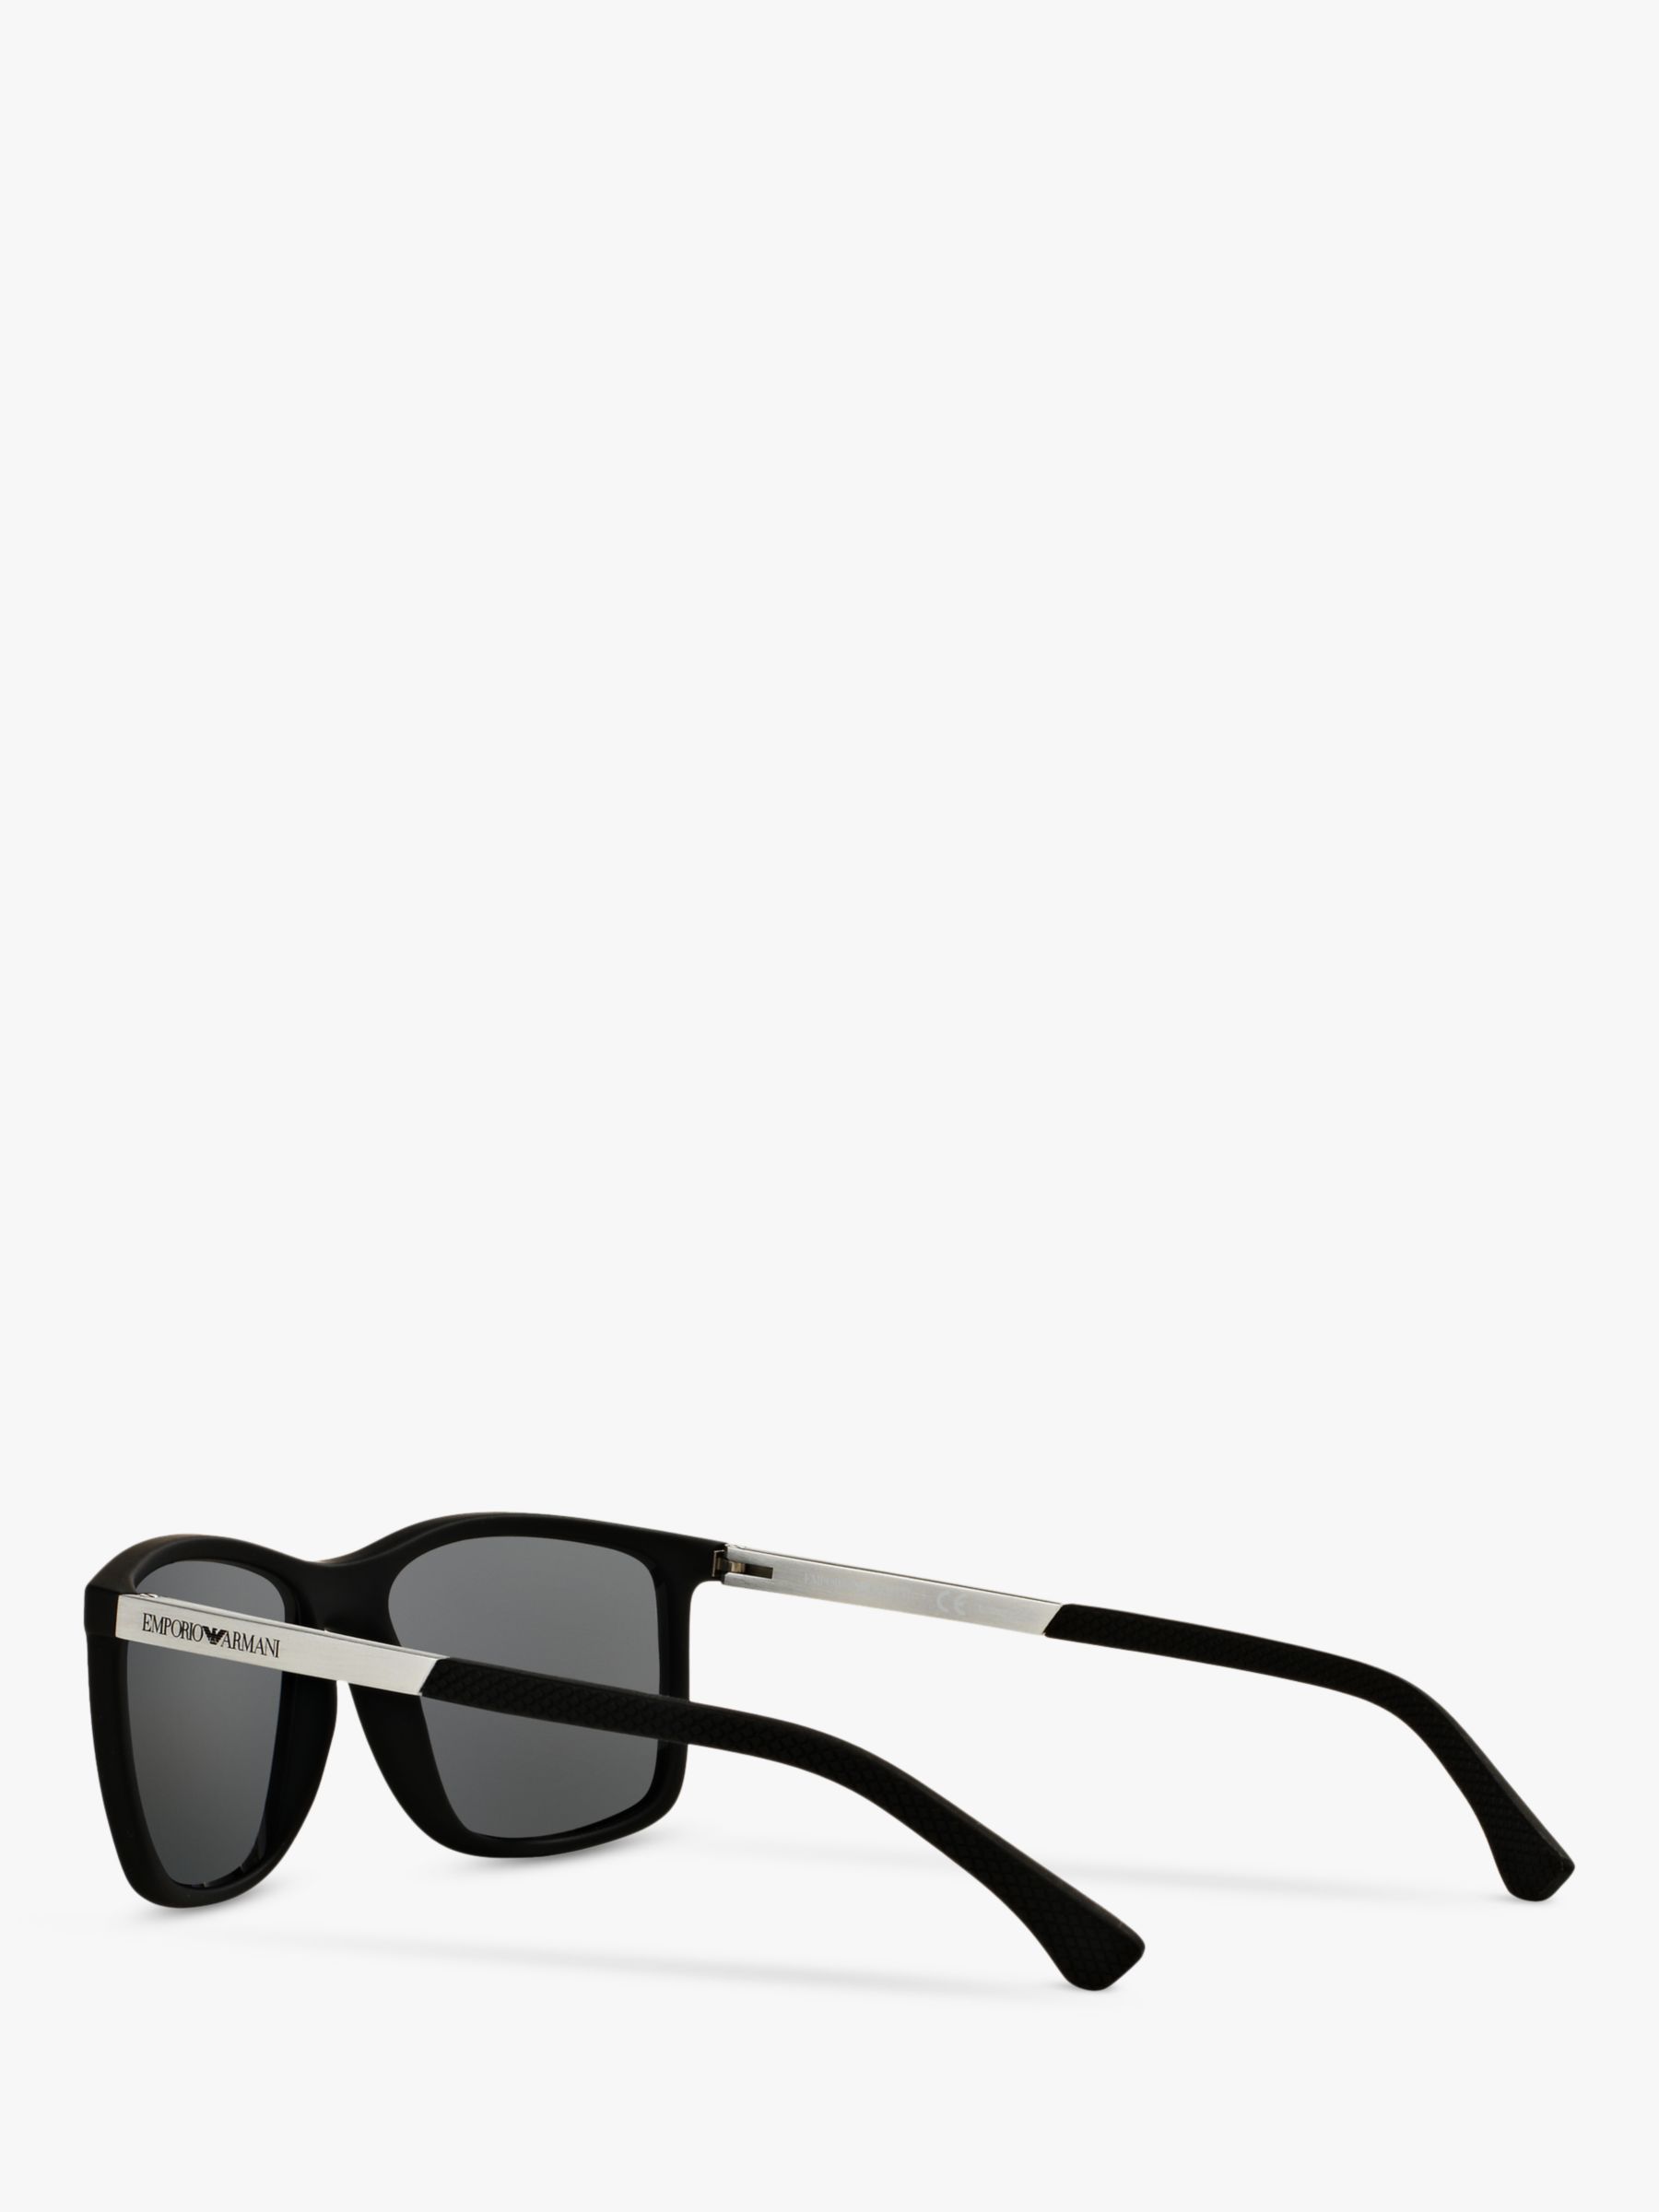 Emporio Armani EA4058 Women's Polarised Rectangular Sunglasses, Matte Black/Grey